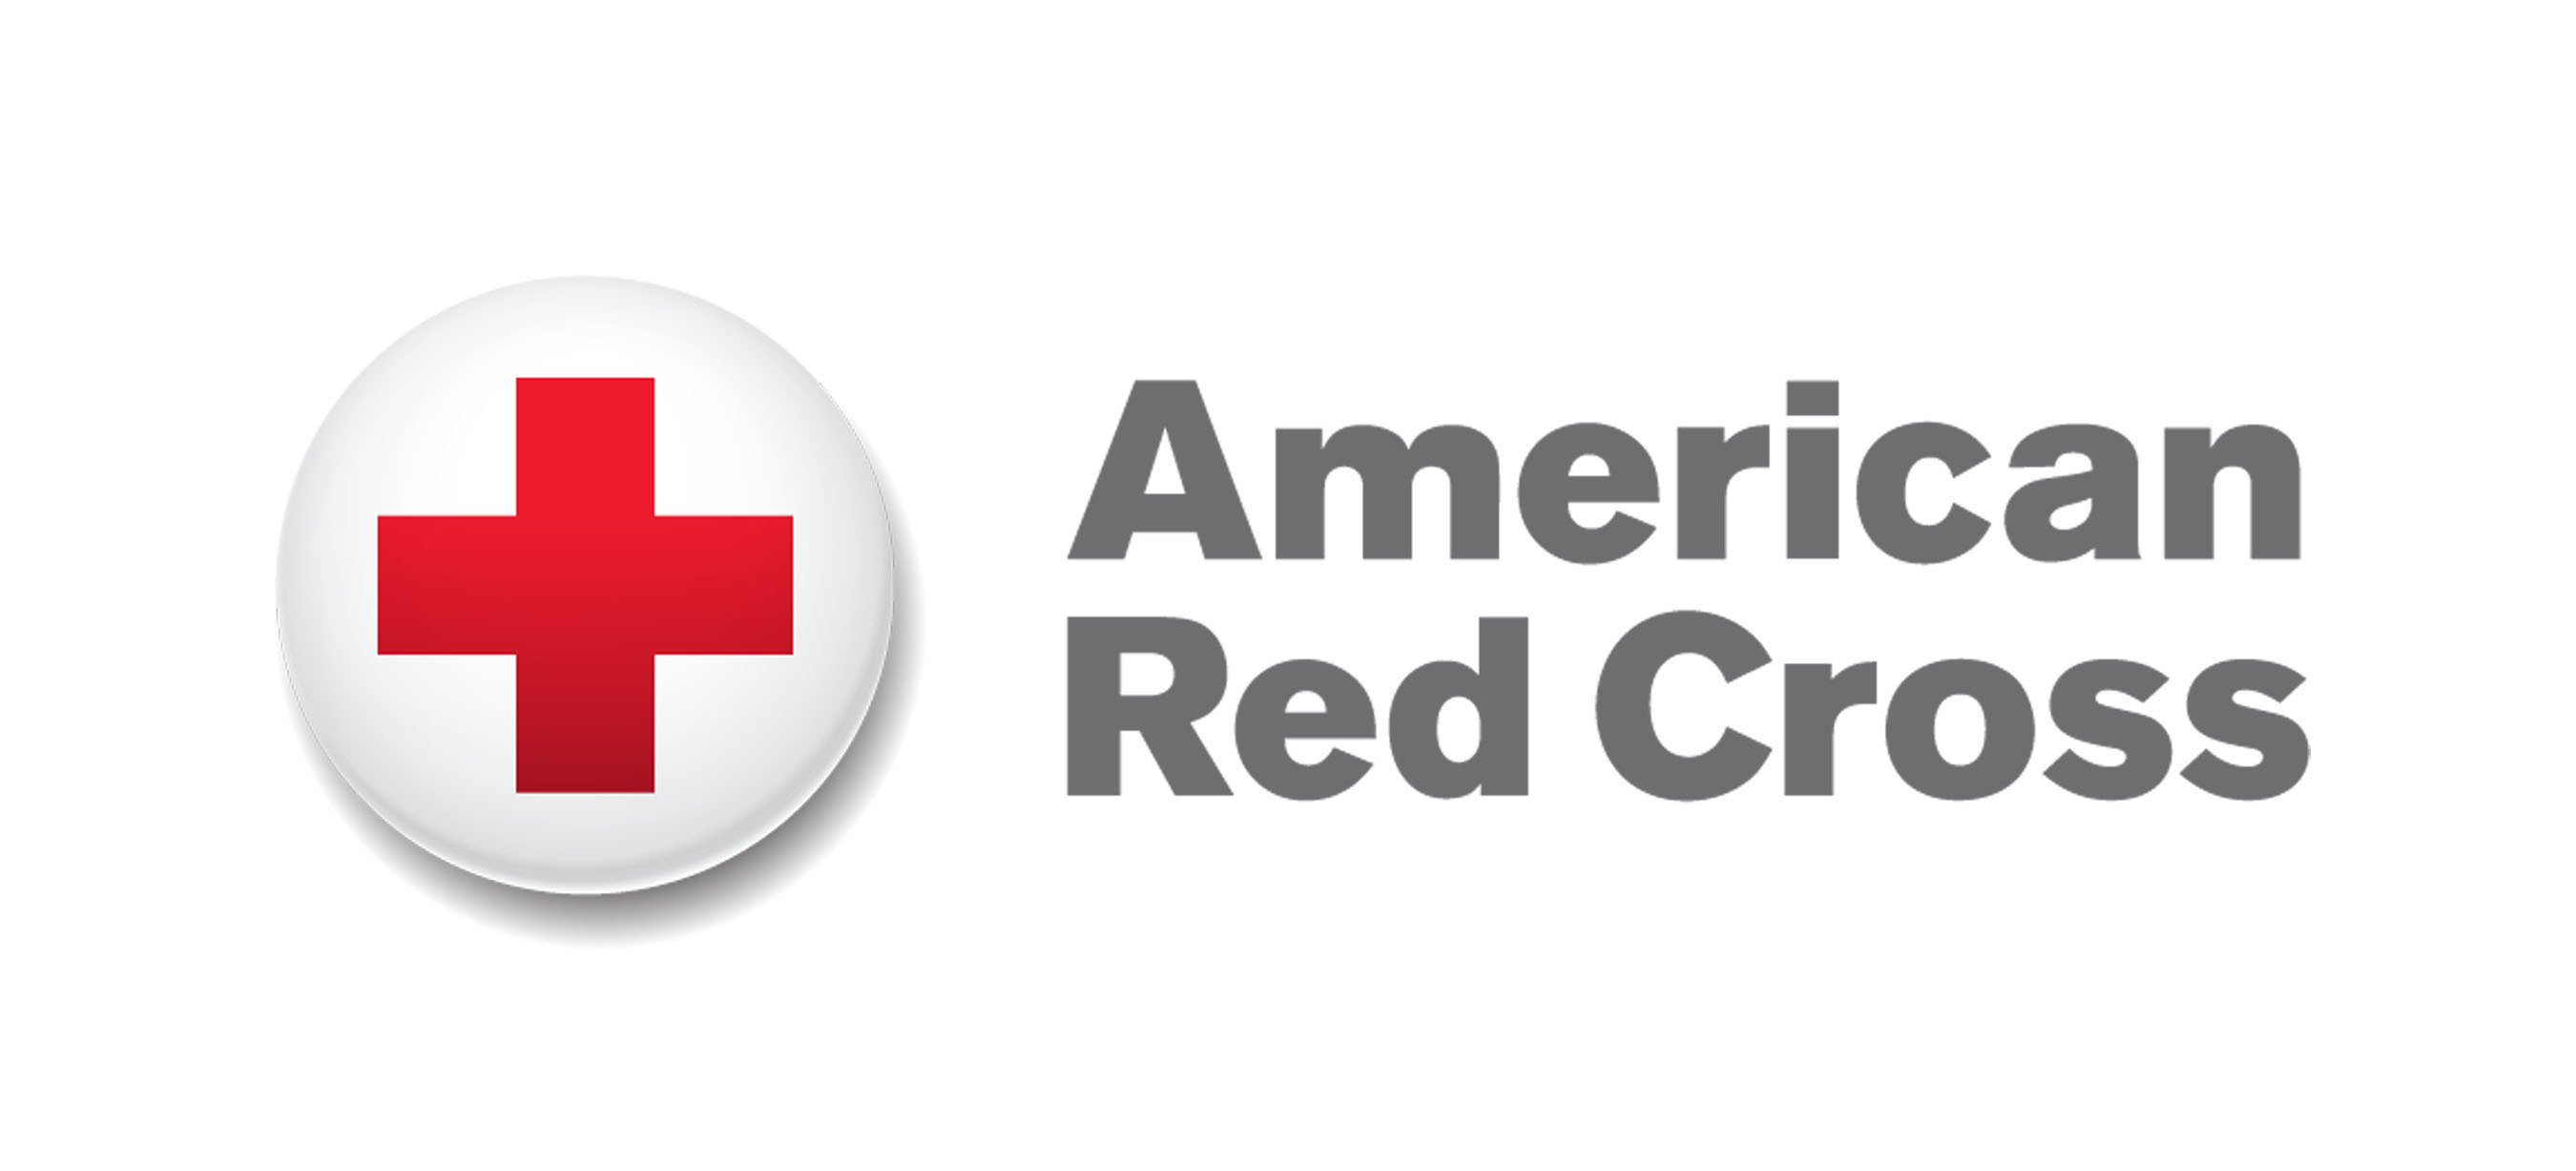 American Red Cross.